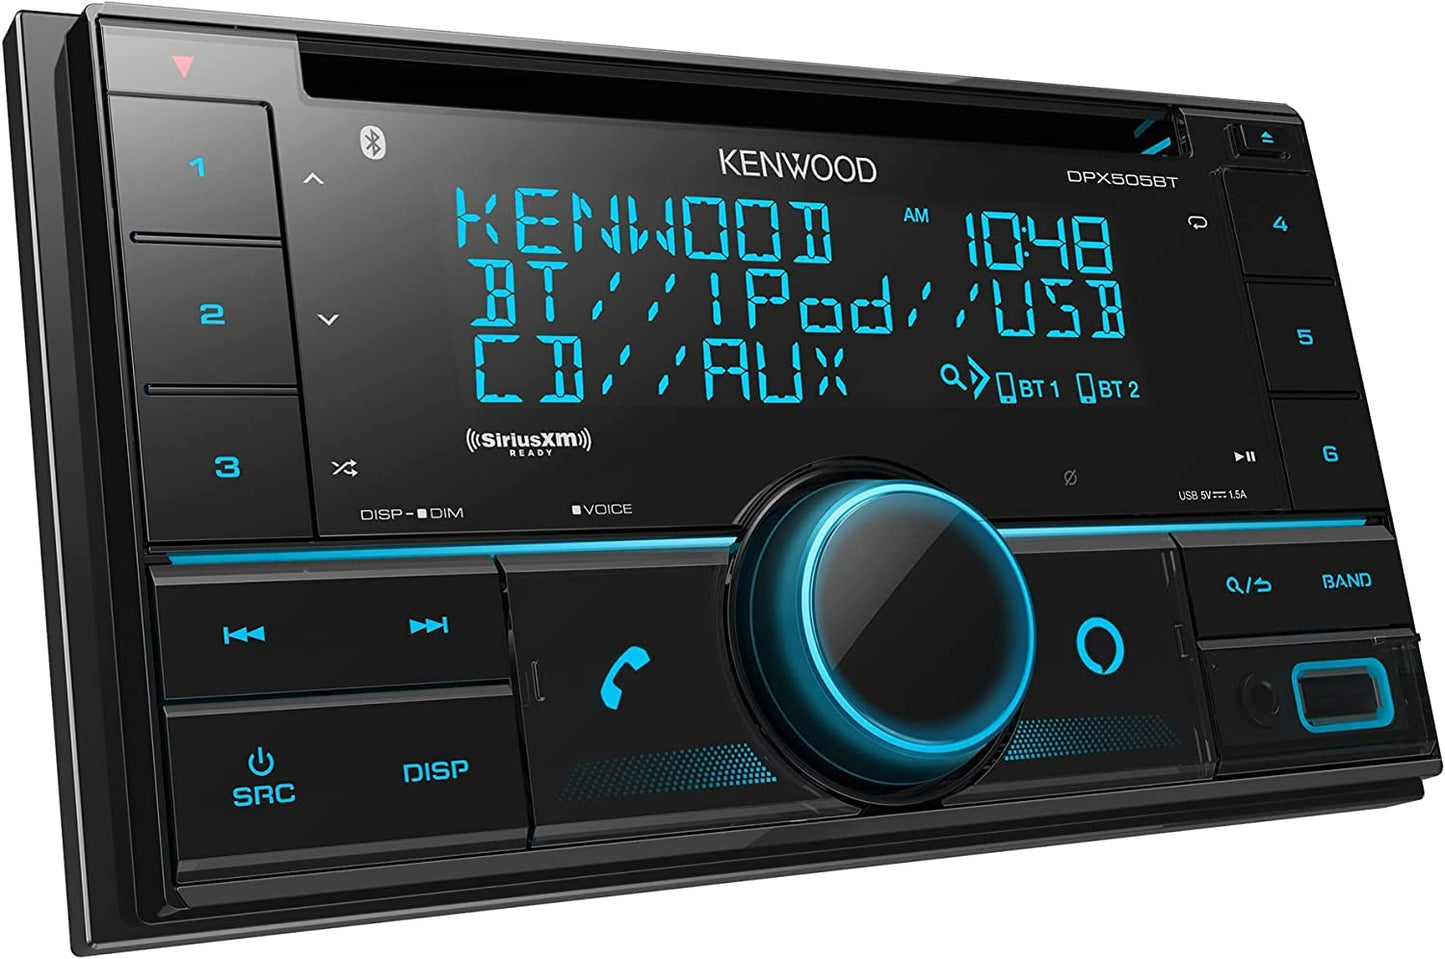 Kenwood DPX505BT AM FM USB CD Bluetooth Car Stereo + SXV300V1 SiriusXM Satellite Tuner